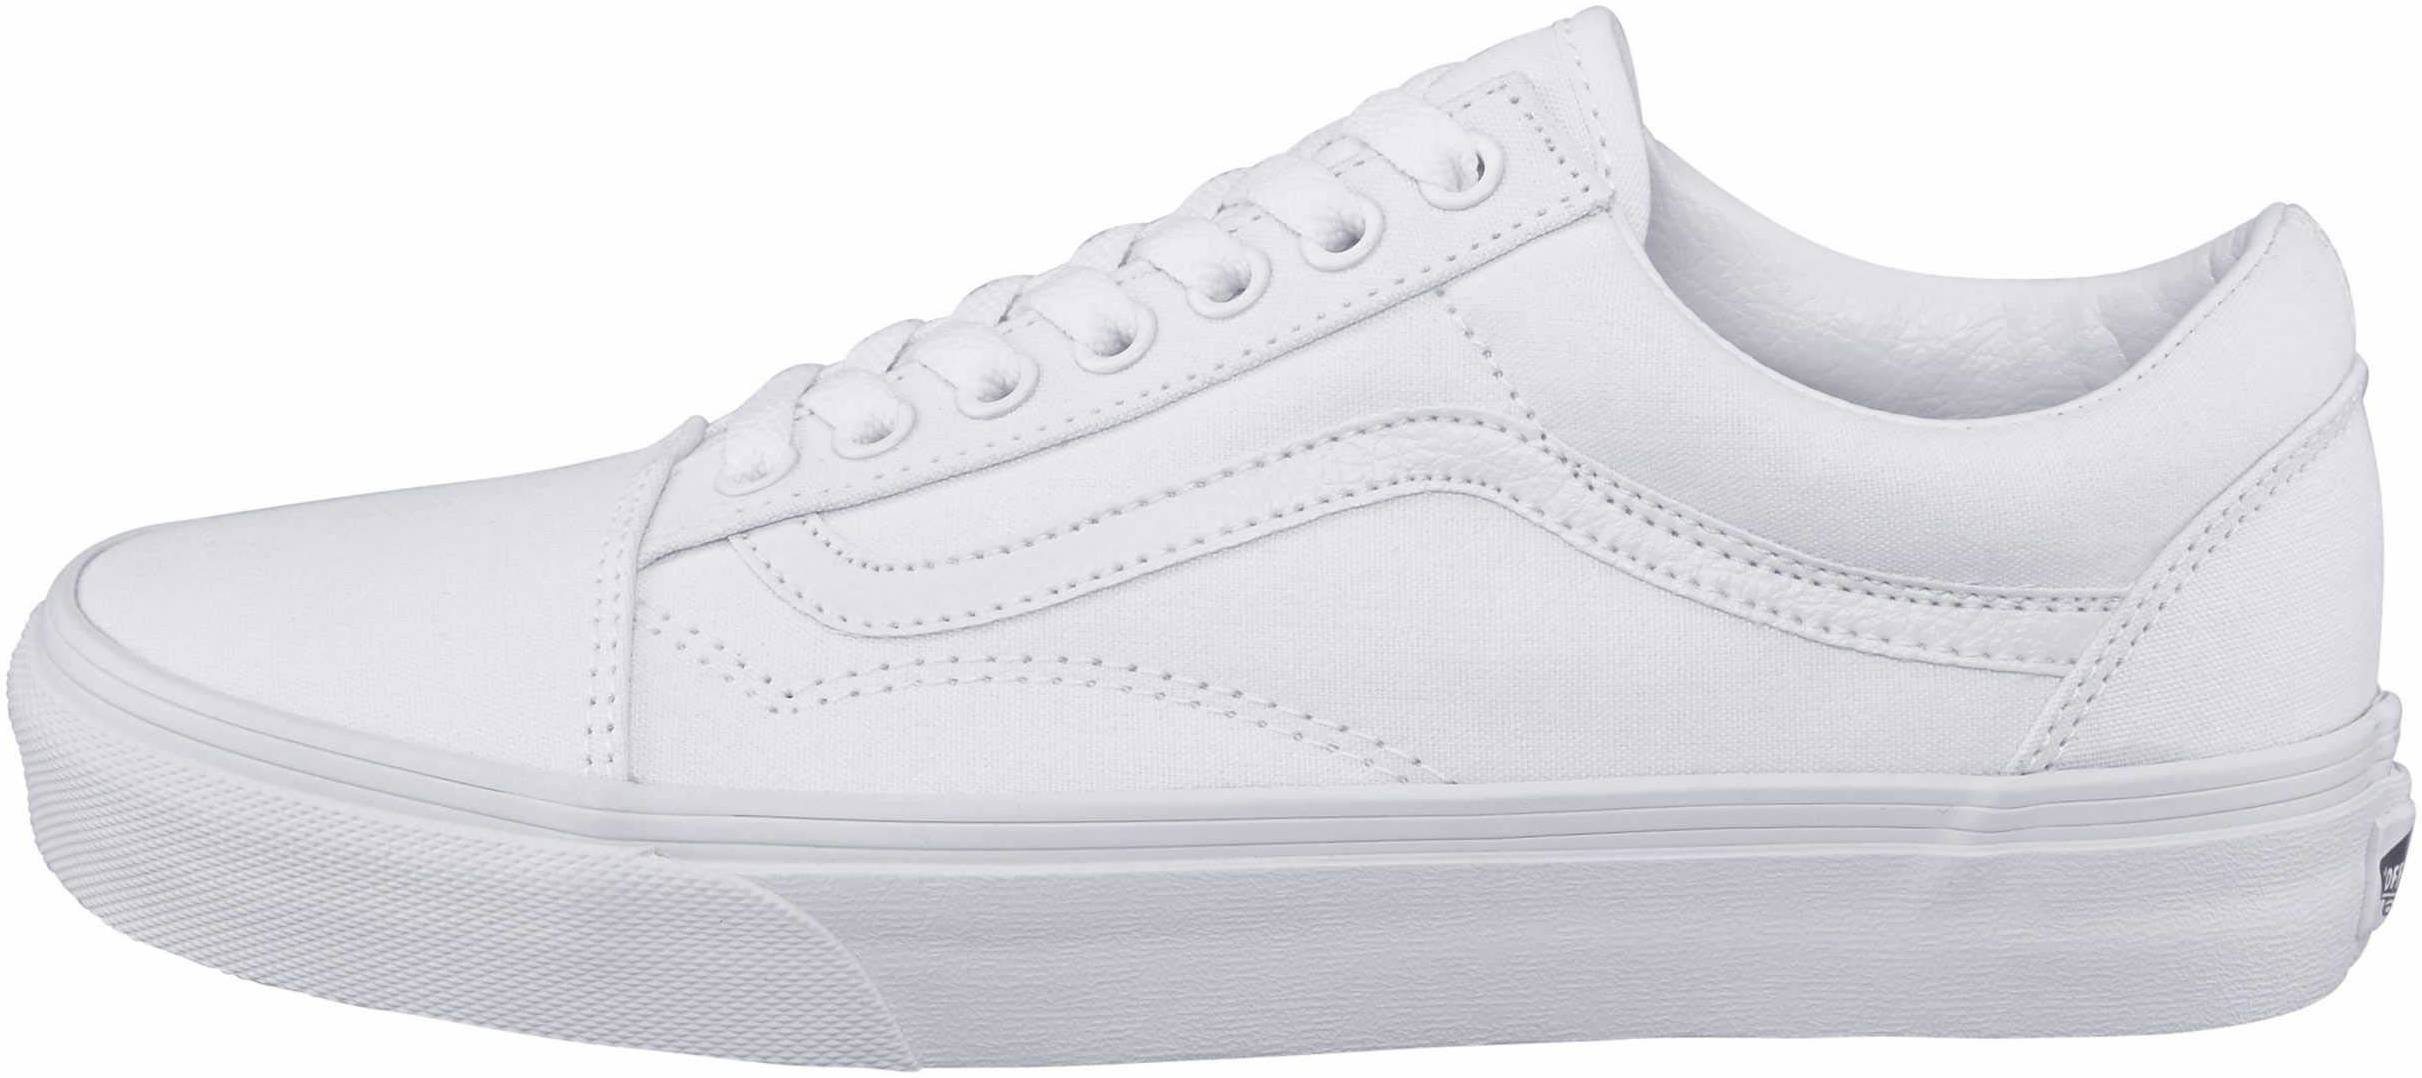 white van shoes